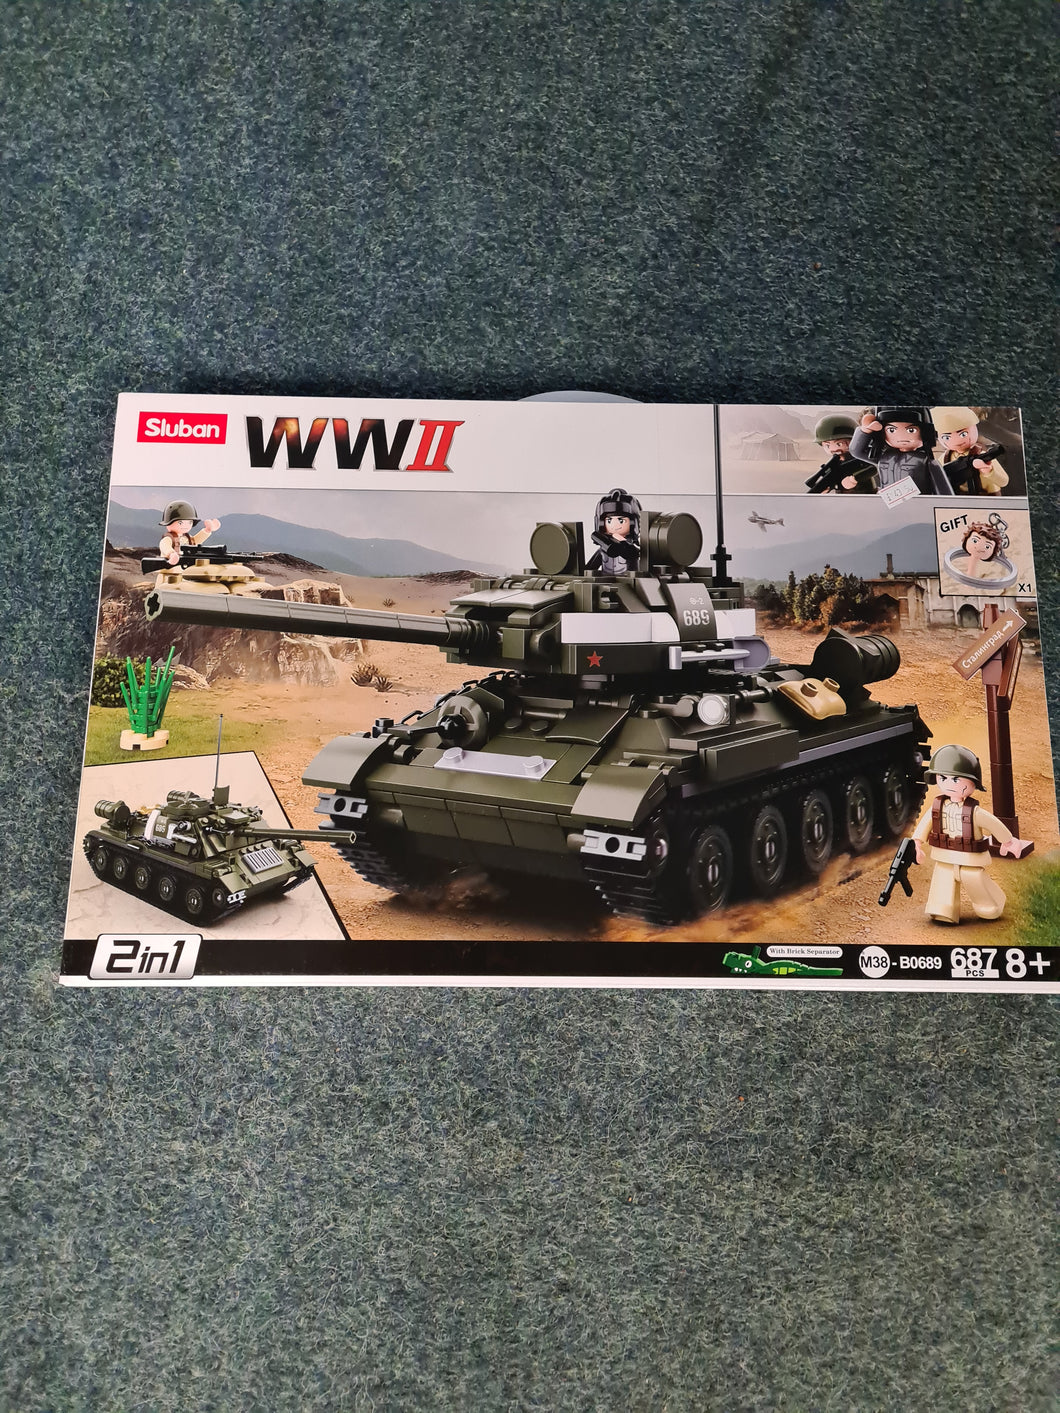 Sluban WW11 2 in 1 tank kit